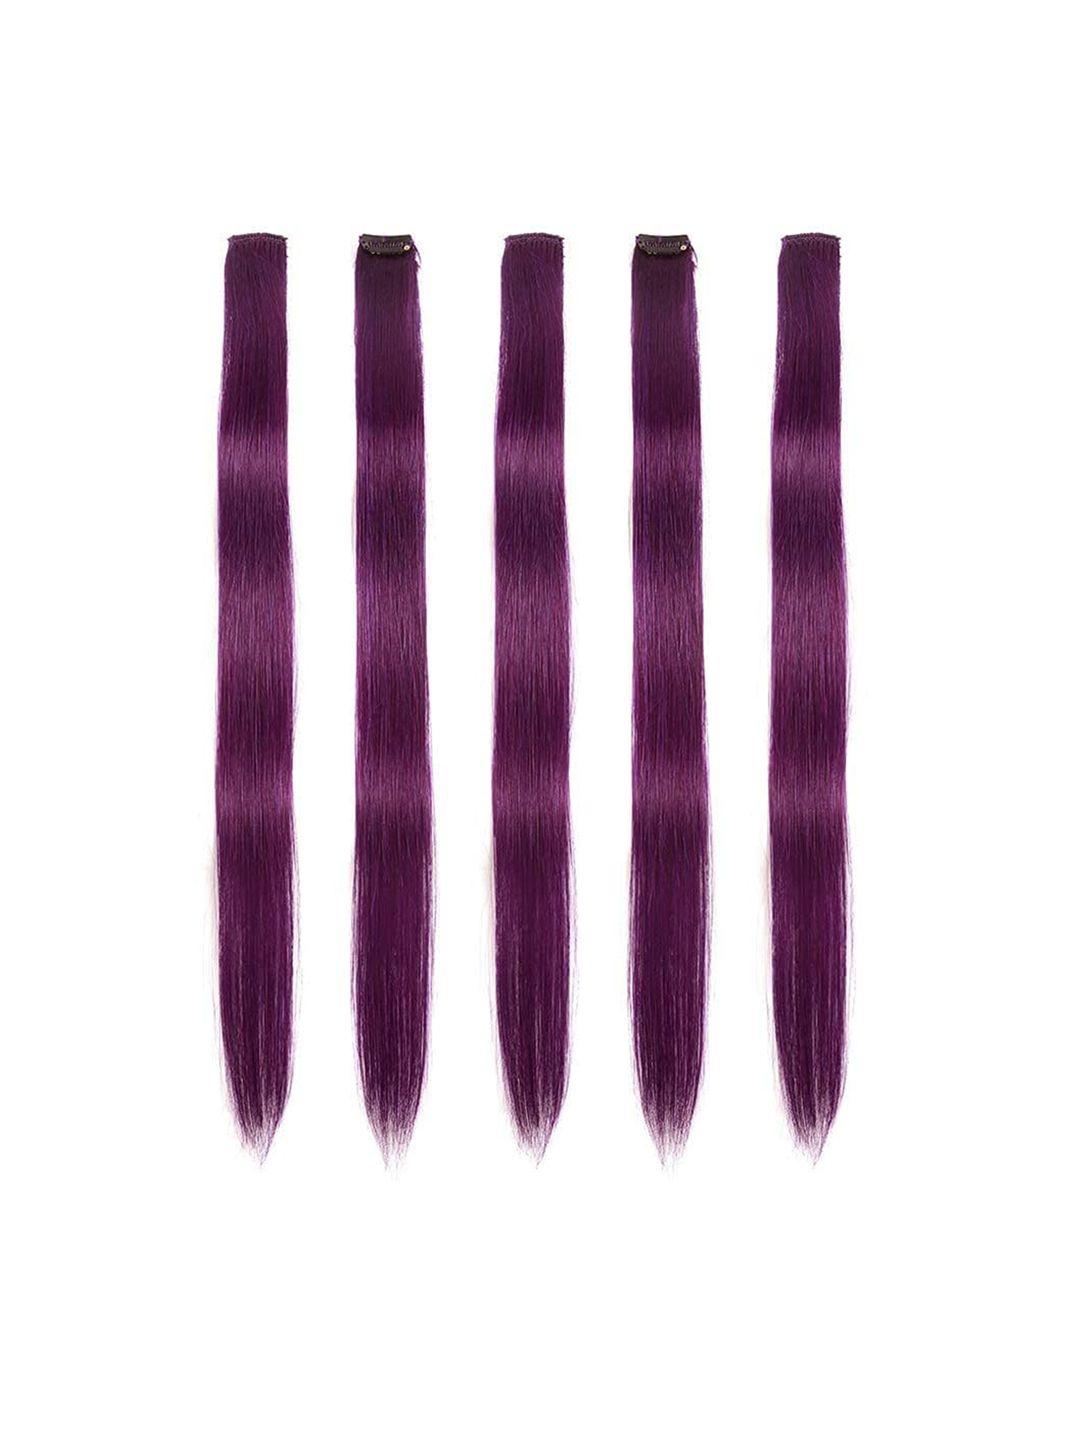 chronex set of 2 straight single clip hair streak color hair extension - dark purple